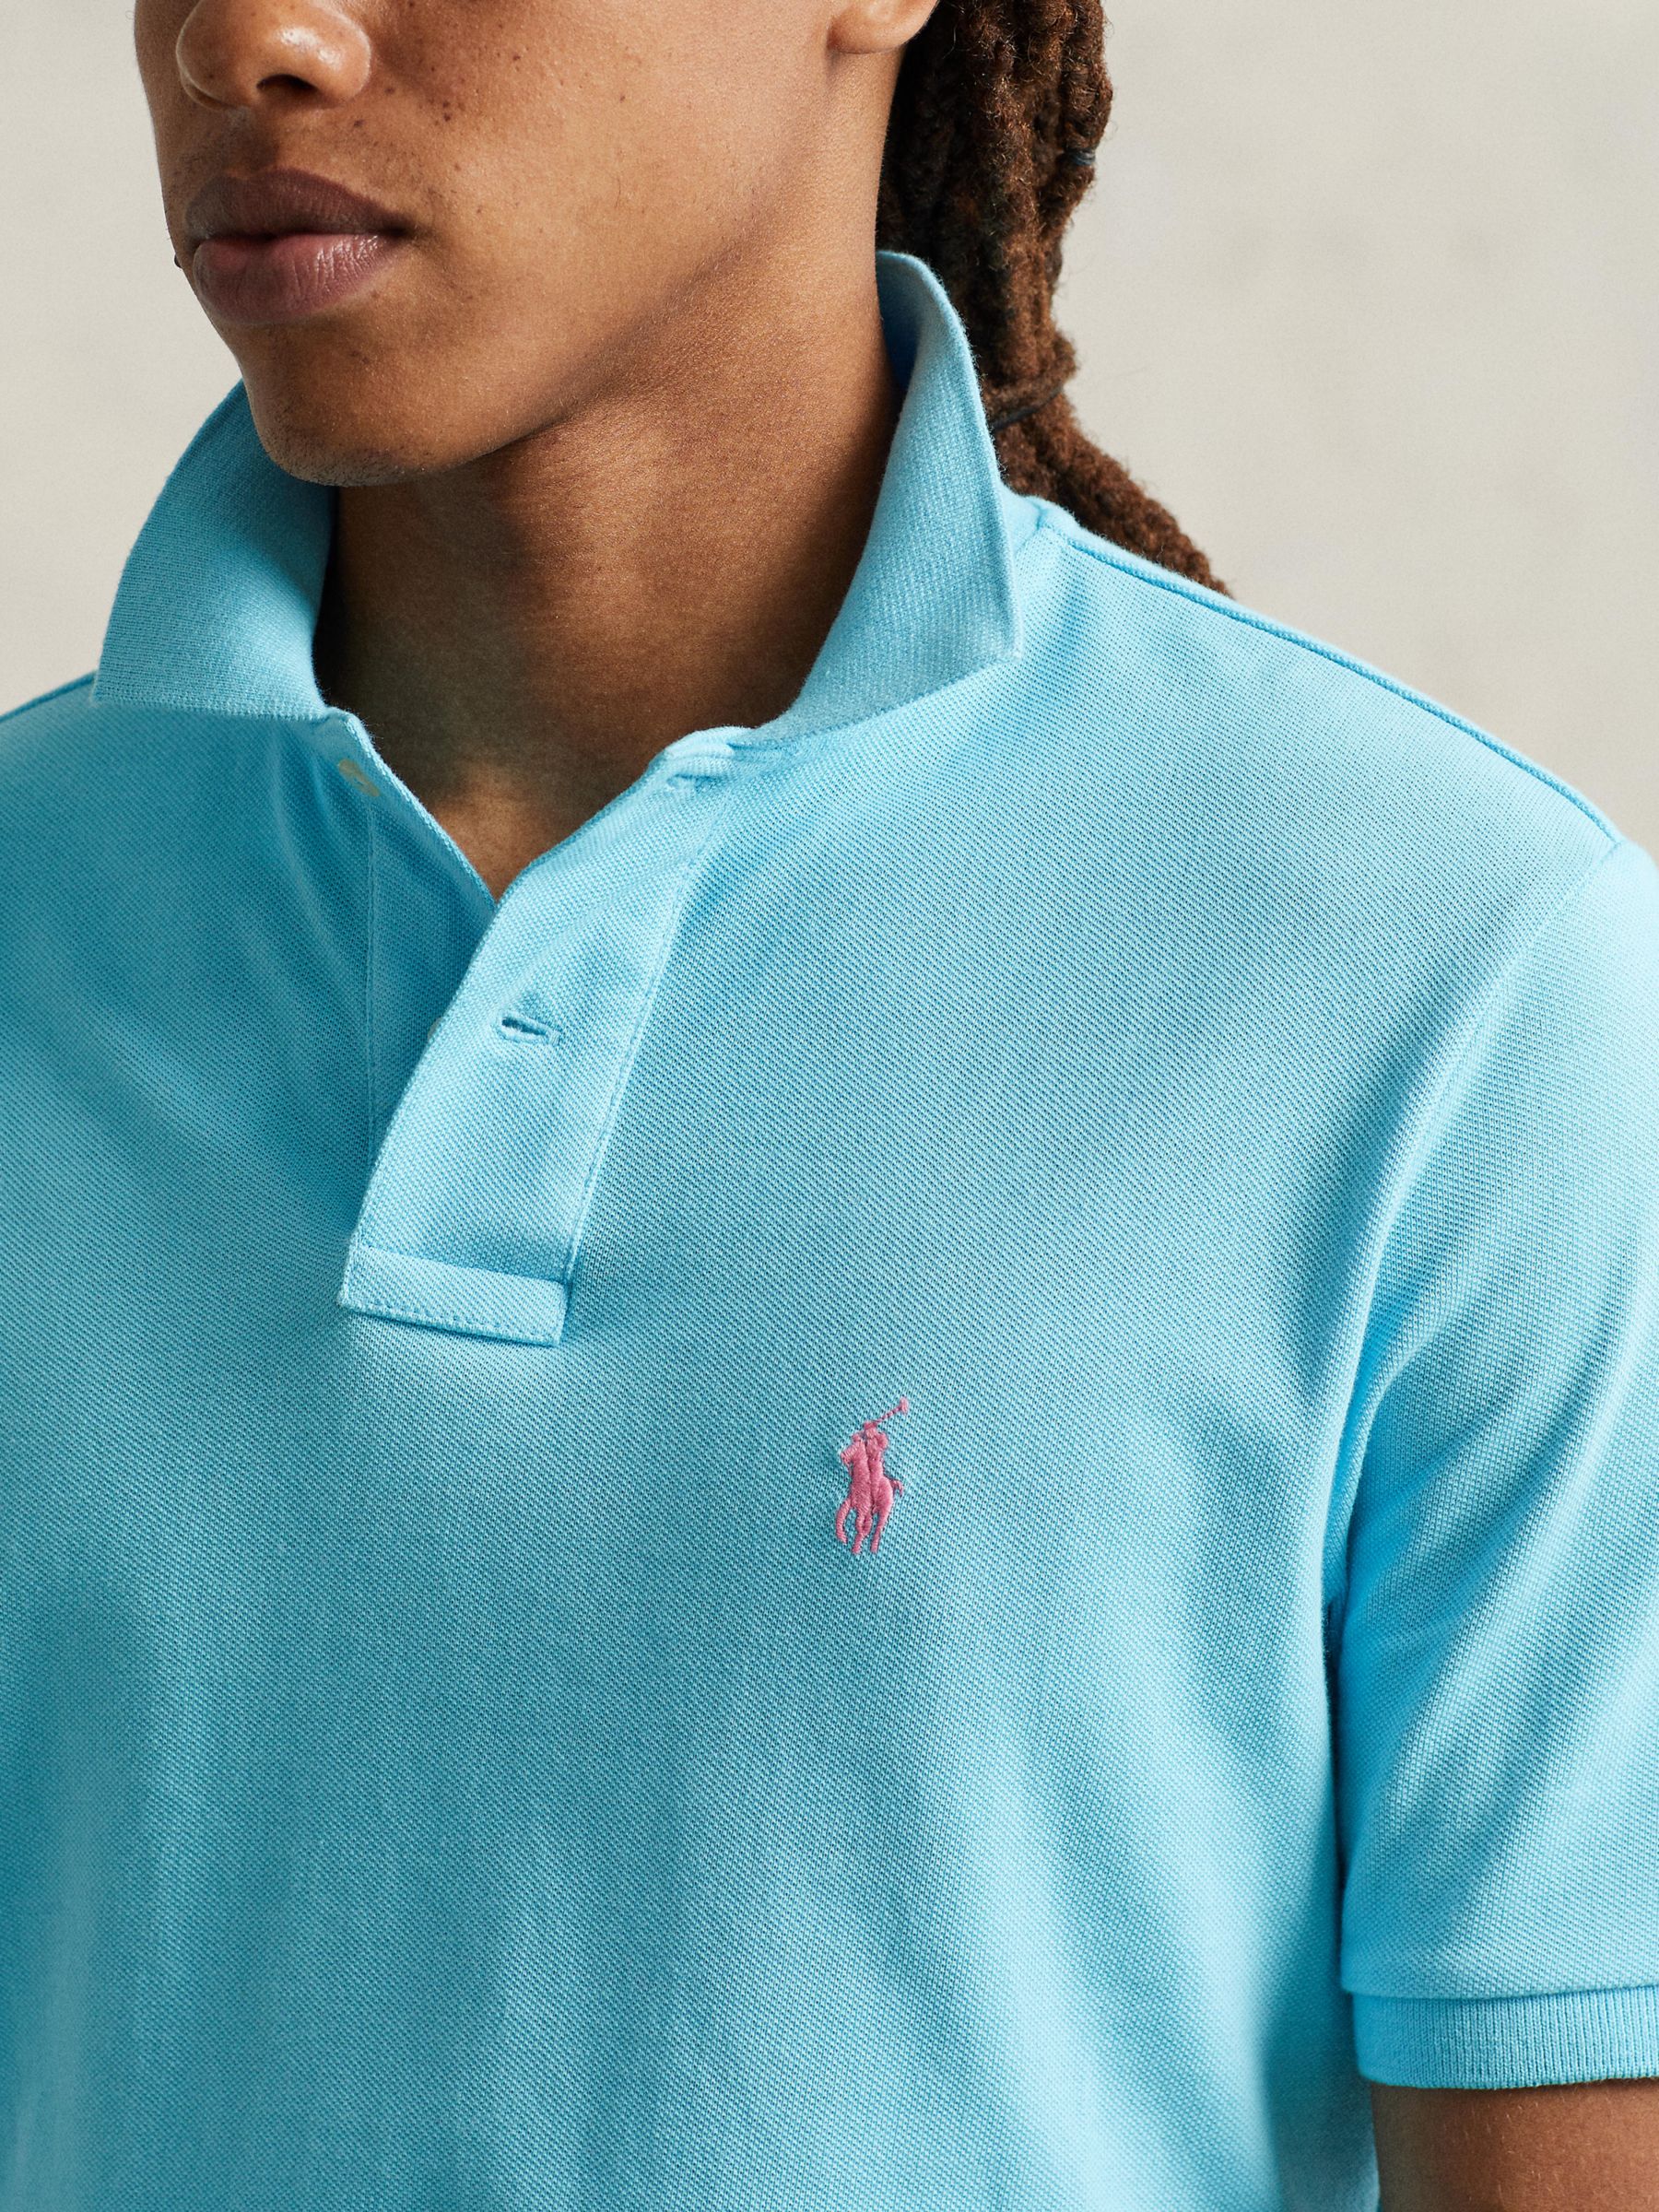 Polo Ralph Lauren Short Sleeve Custom Slim Polo Shirt, Turquoise Nova, S